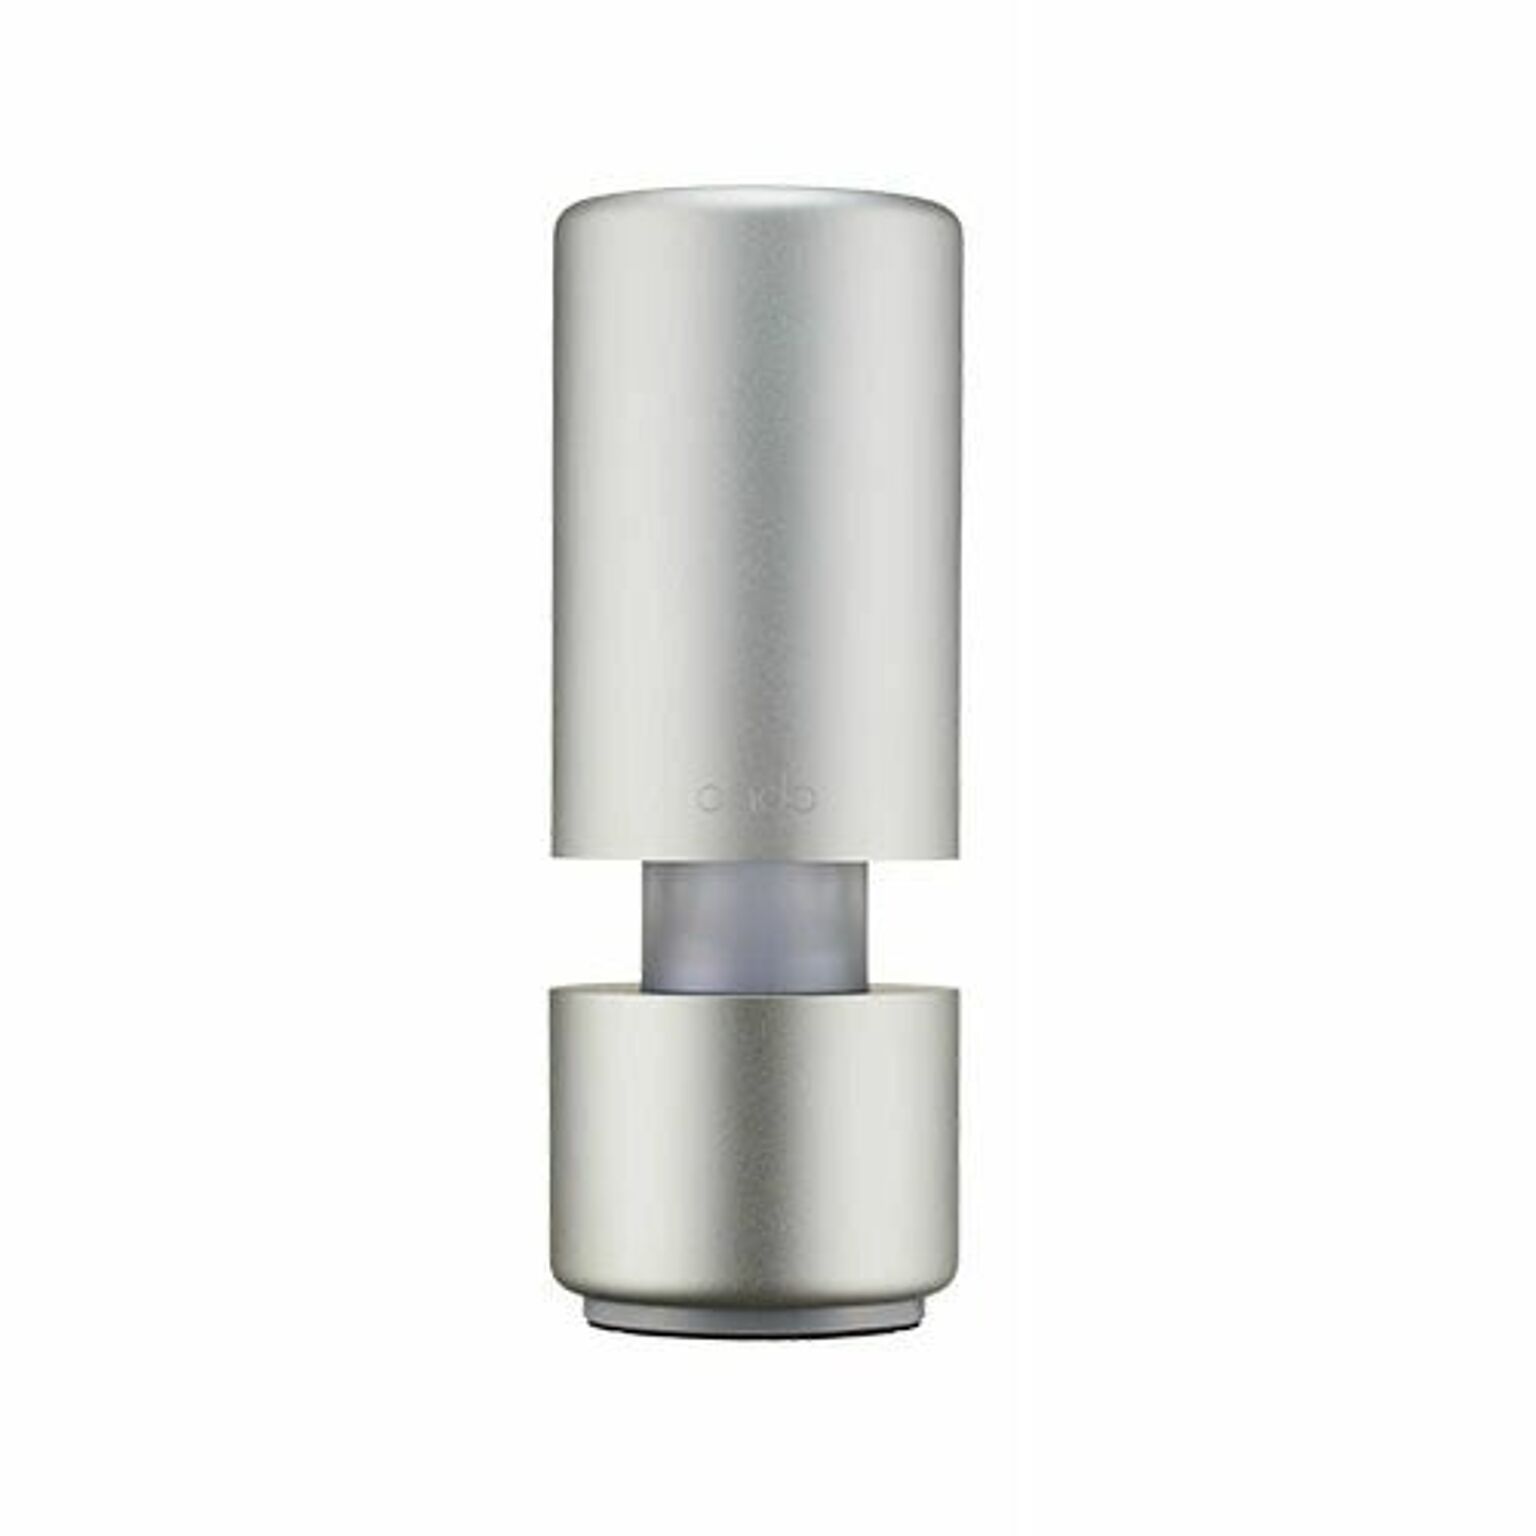 cado ポータブル空気清浄器 LEAF-Portable MP-C30 シルバー 車載・小スペースタイプ USB電源 LED